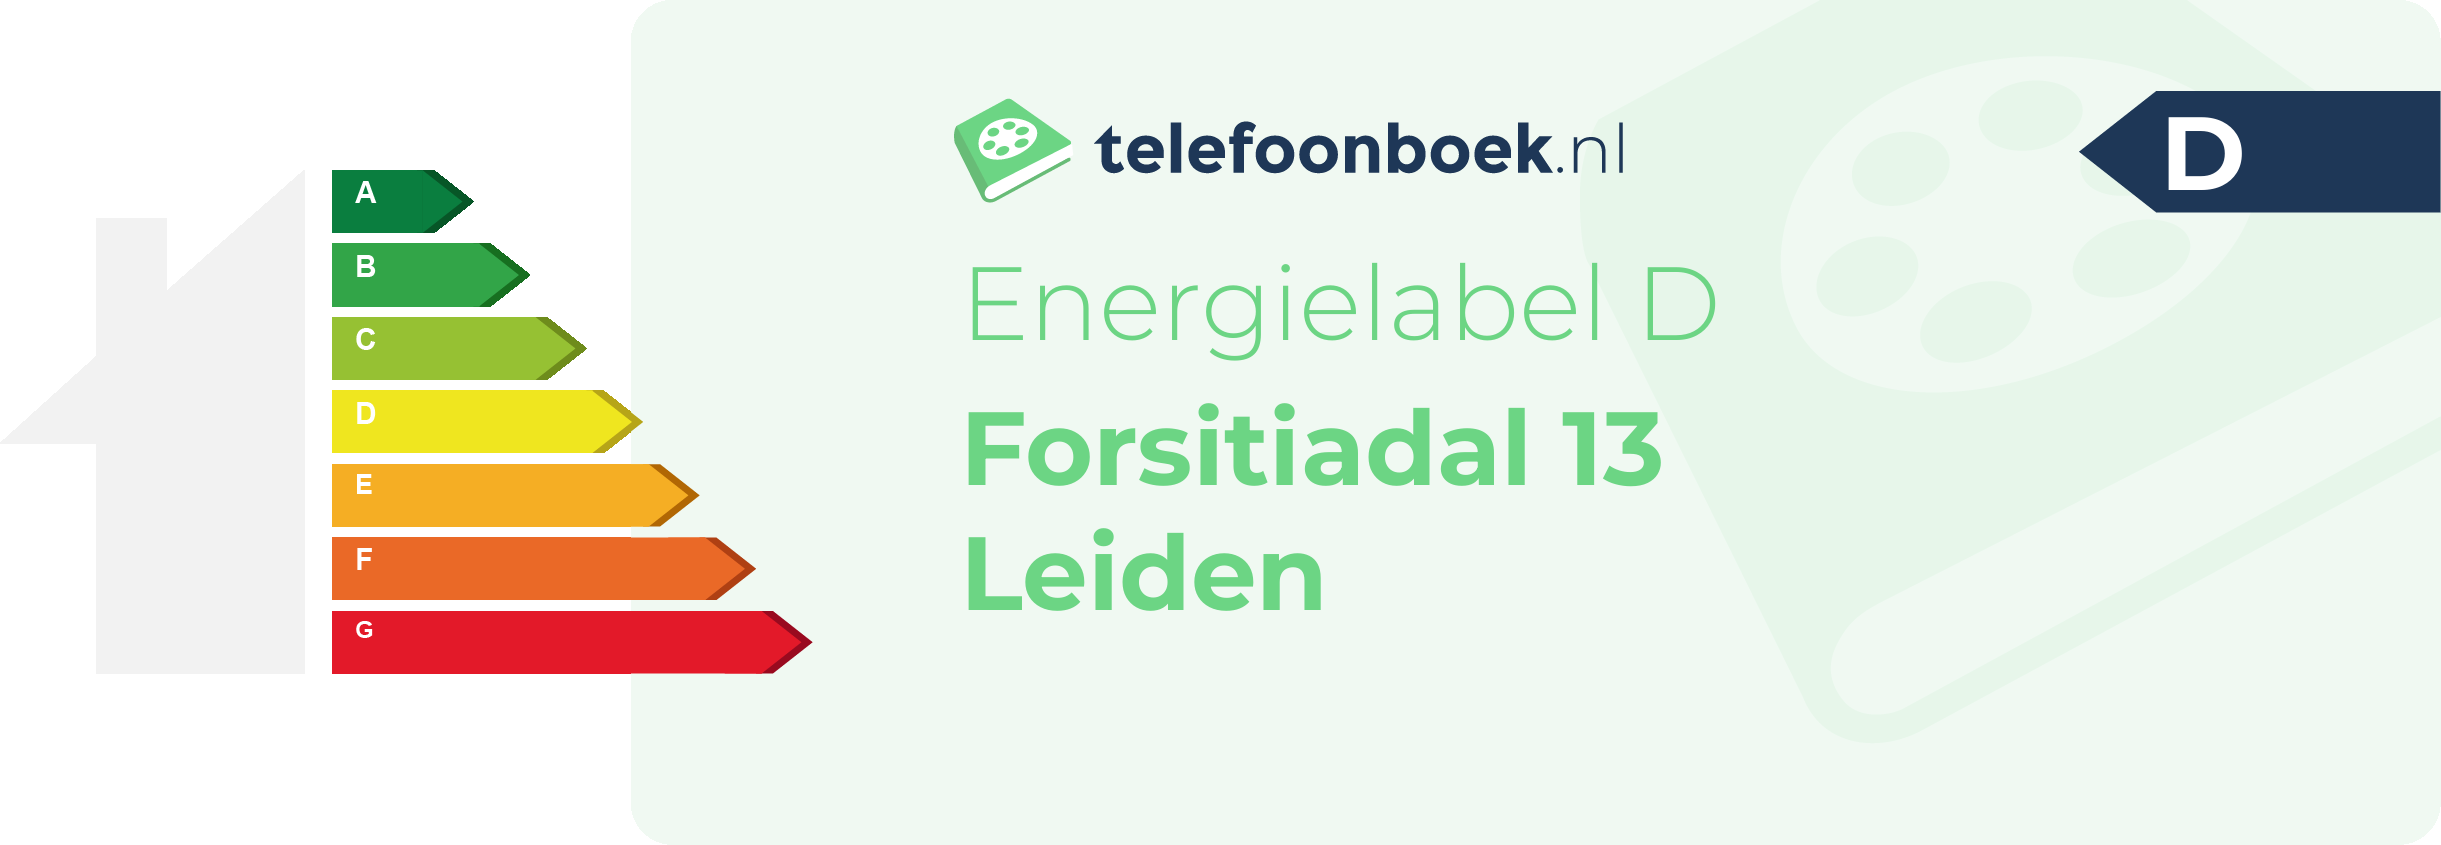 Energielabel Forsitiadal 13 Leiden